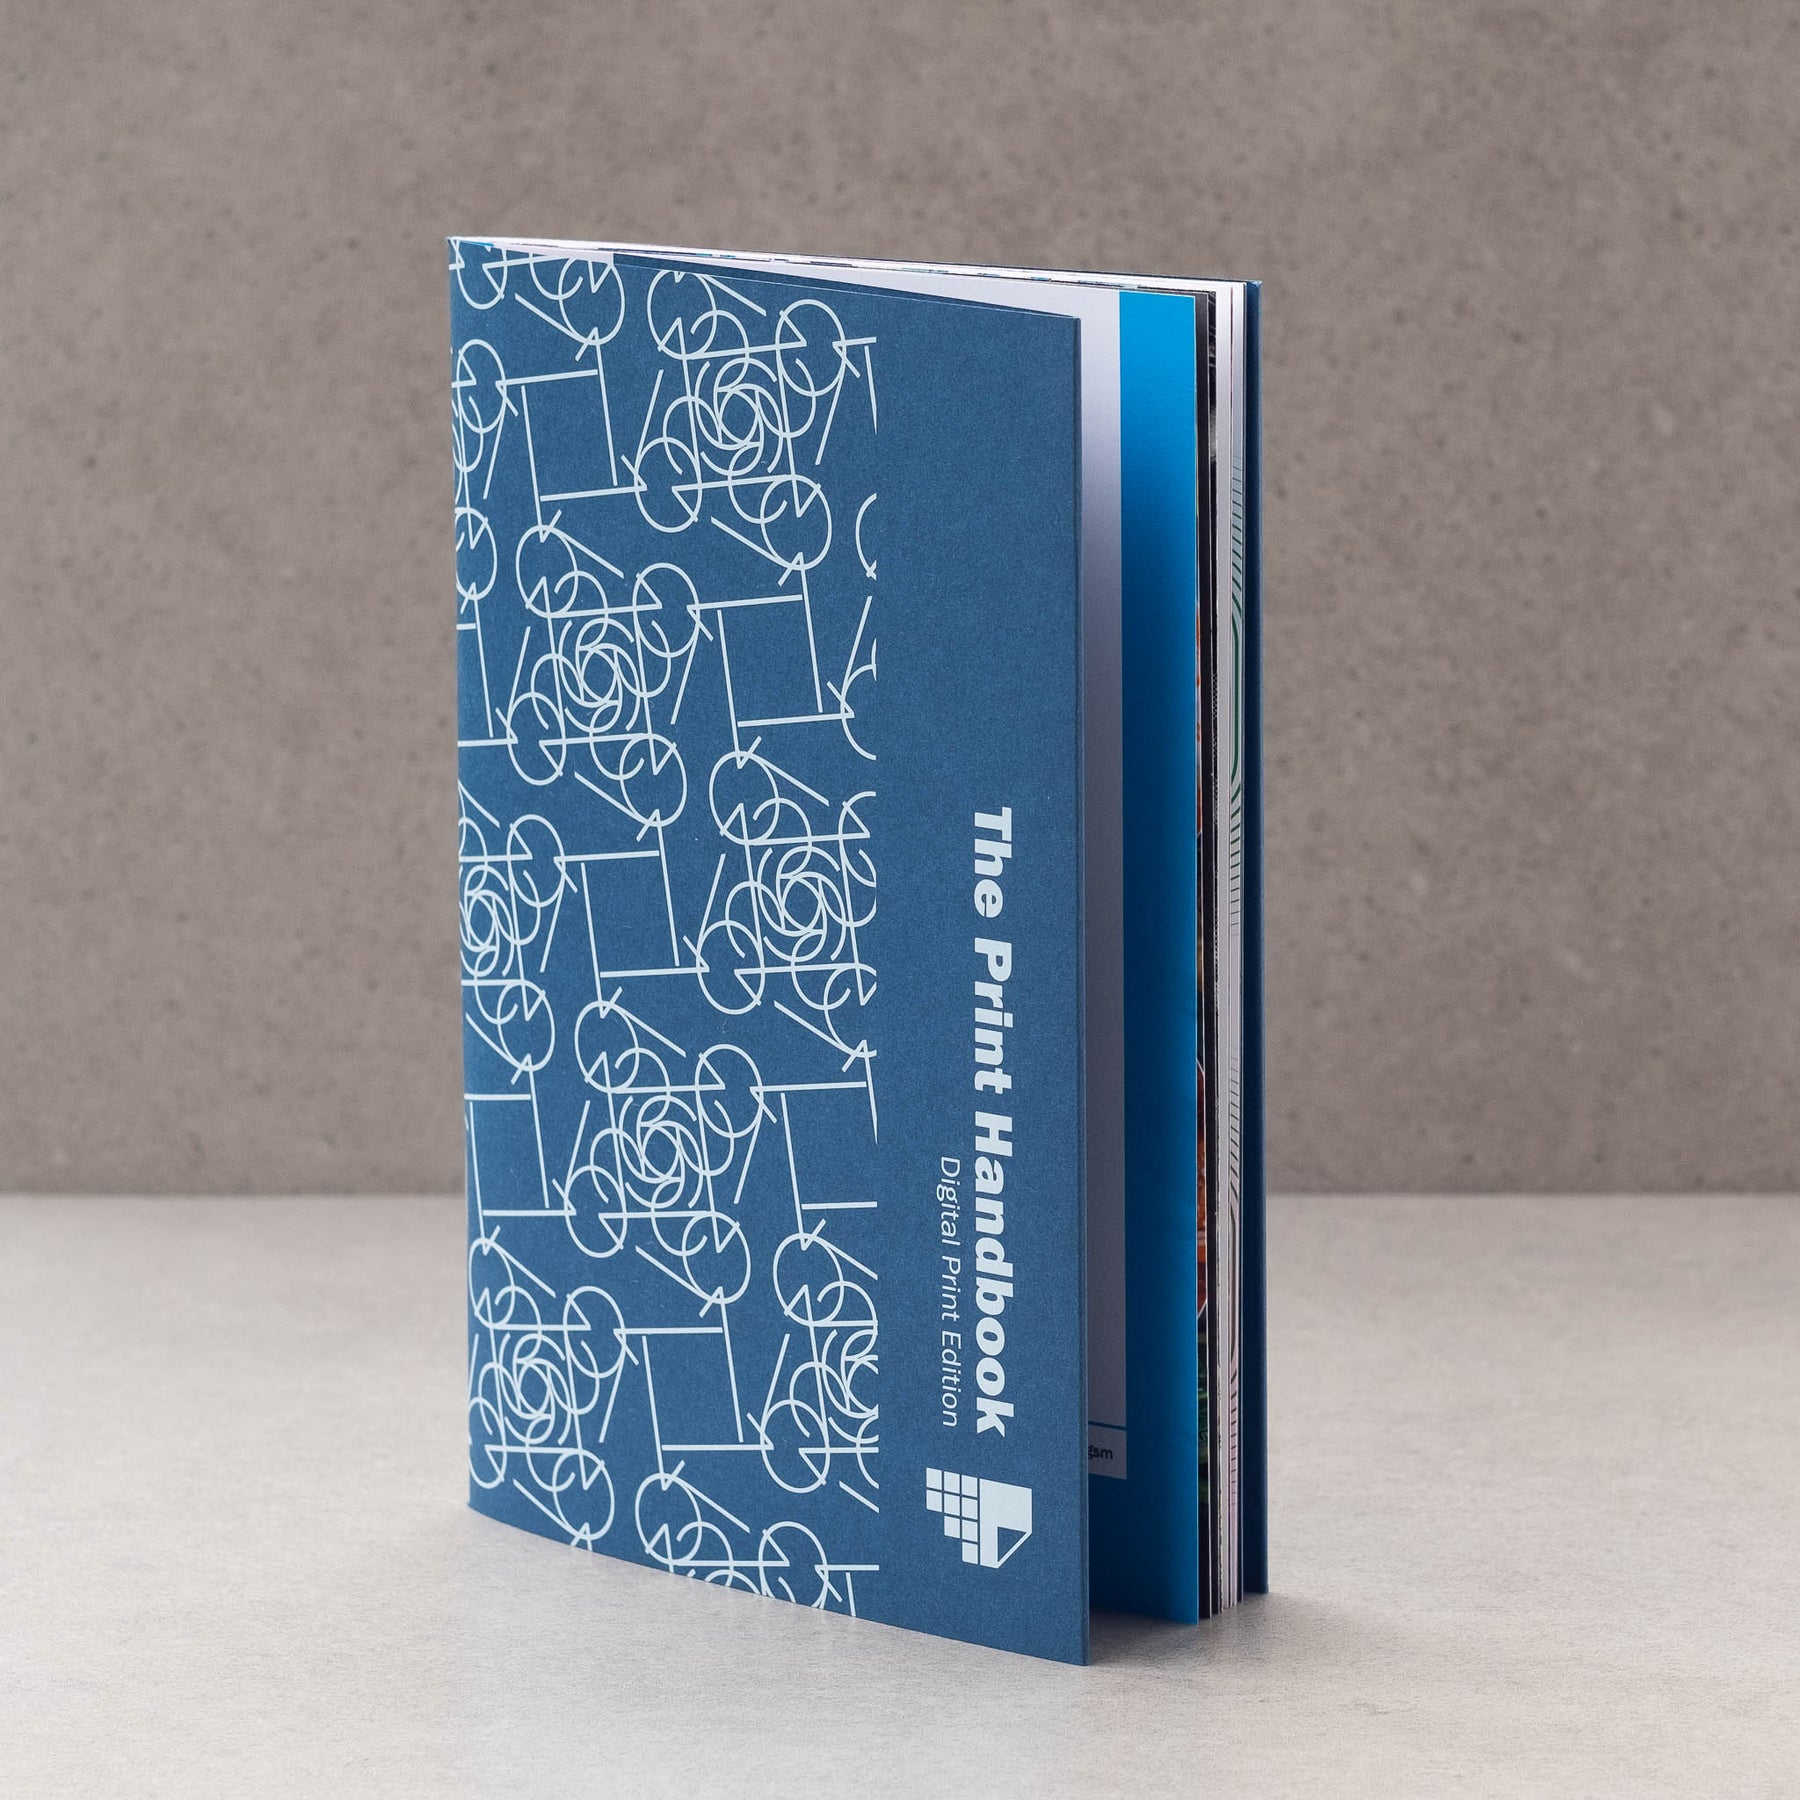 The Digital Print Handbook